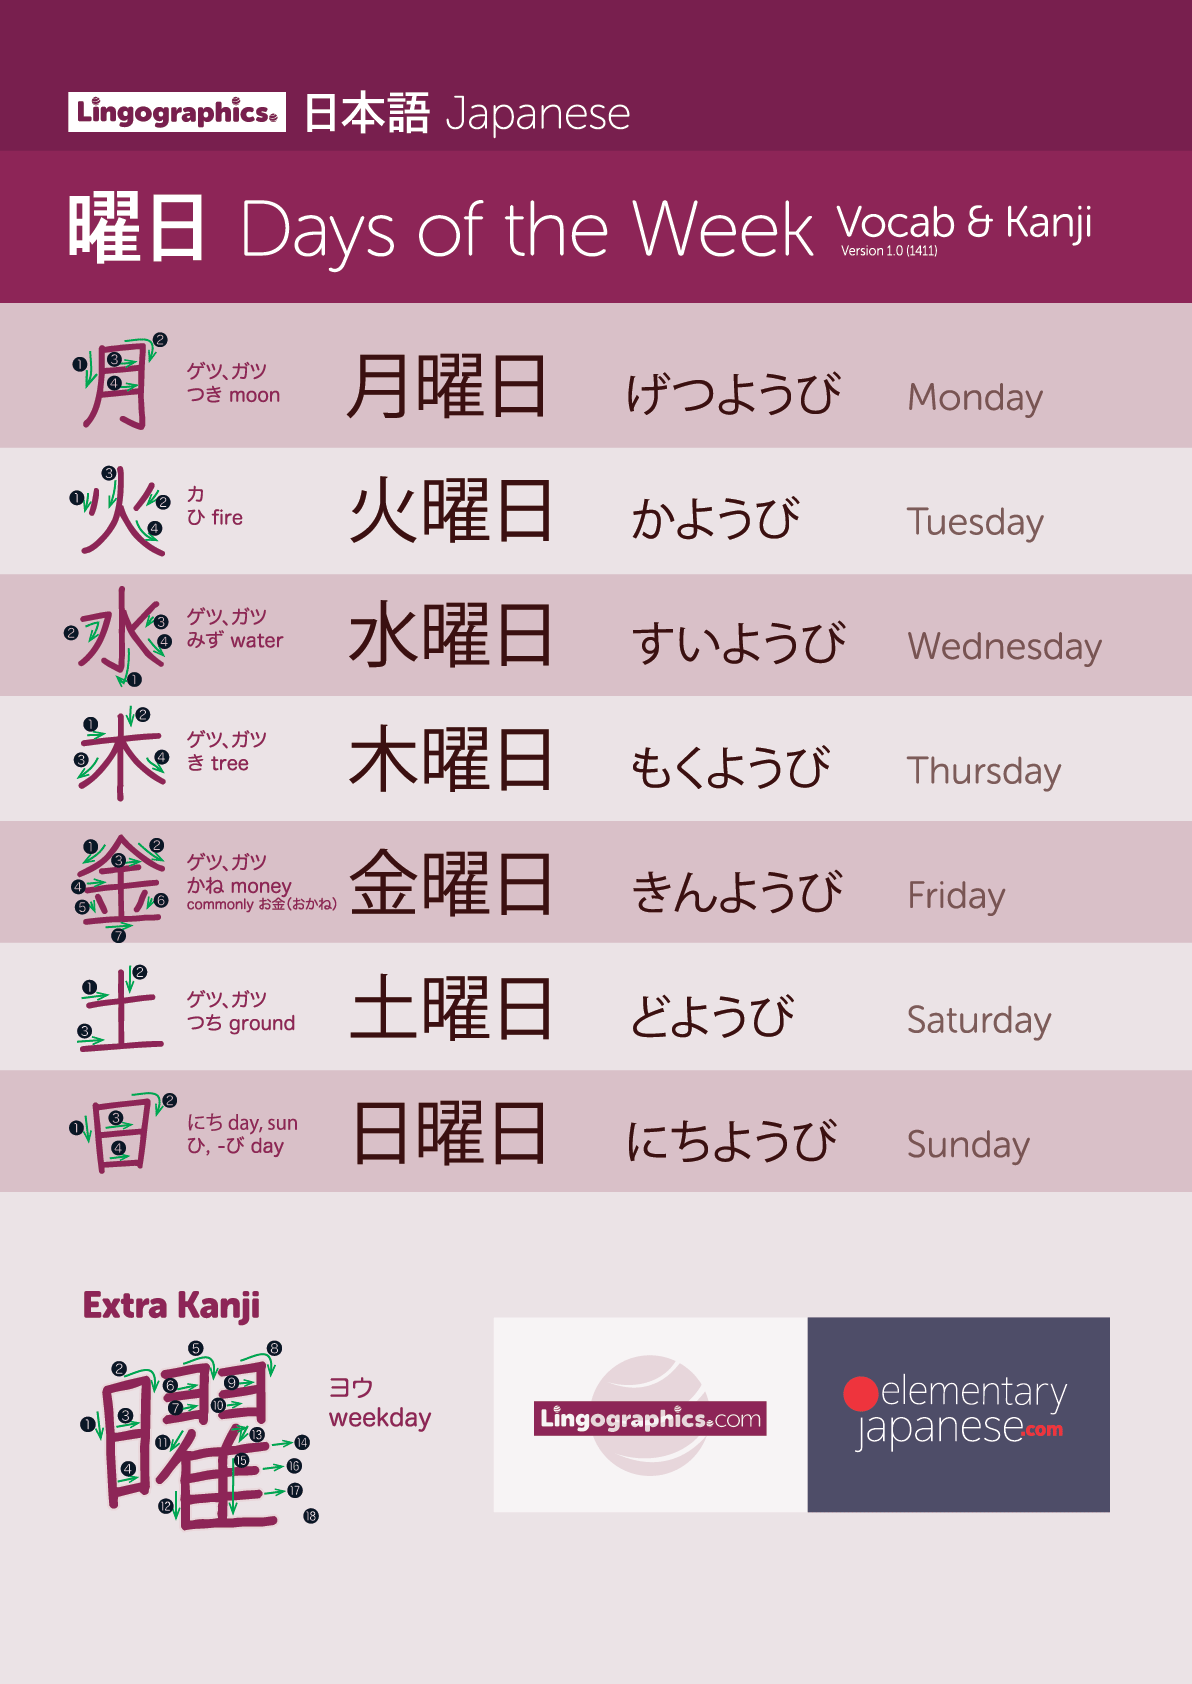 Kanji Chart With Stroke Order